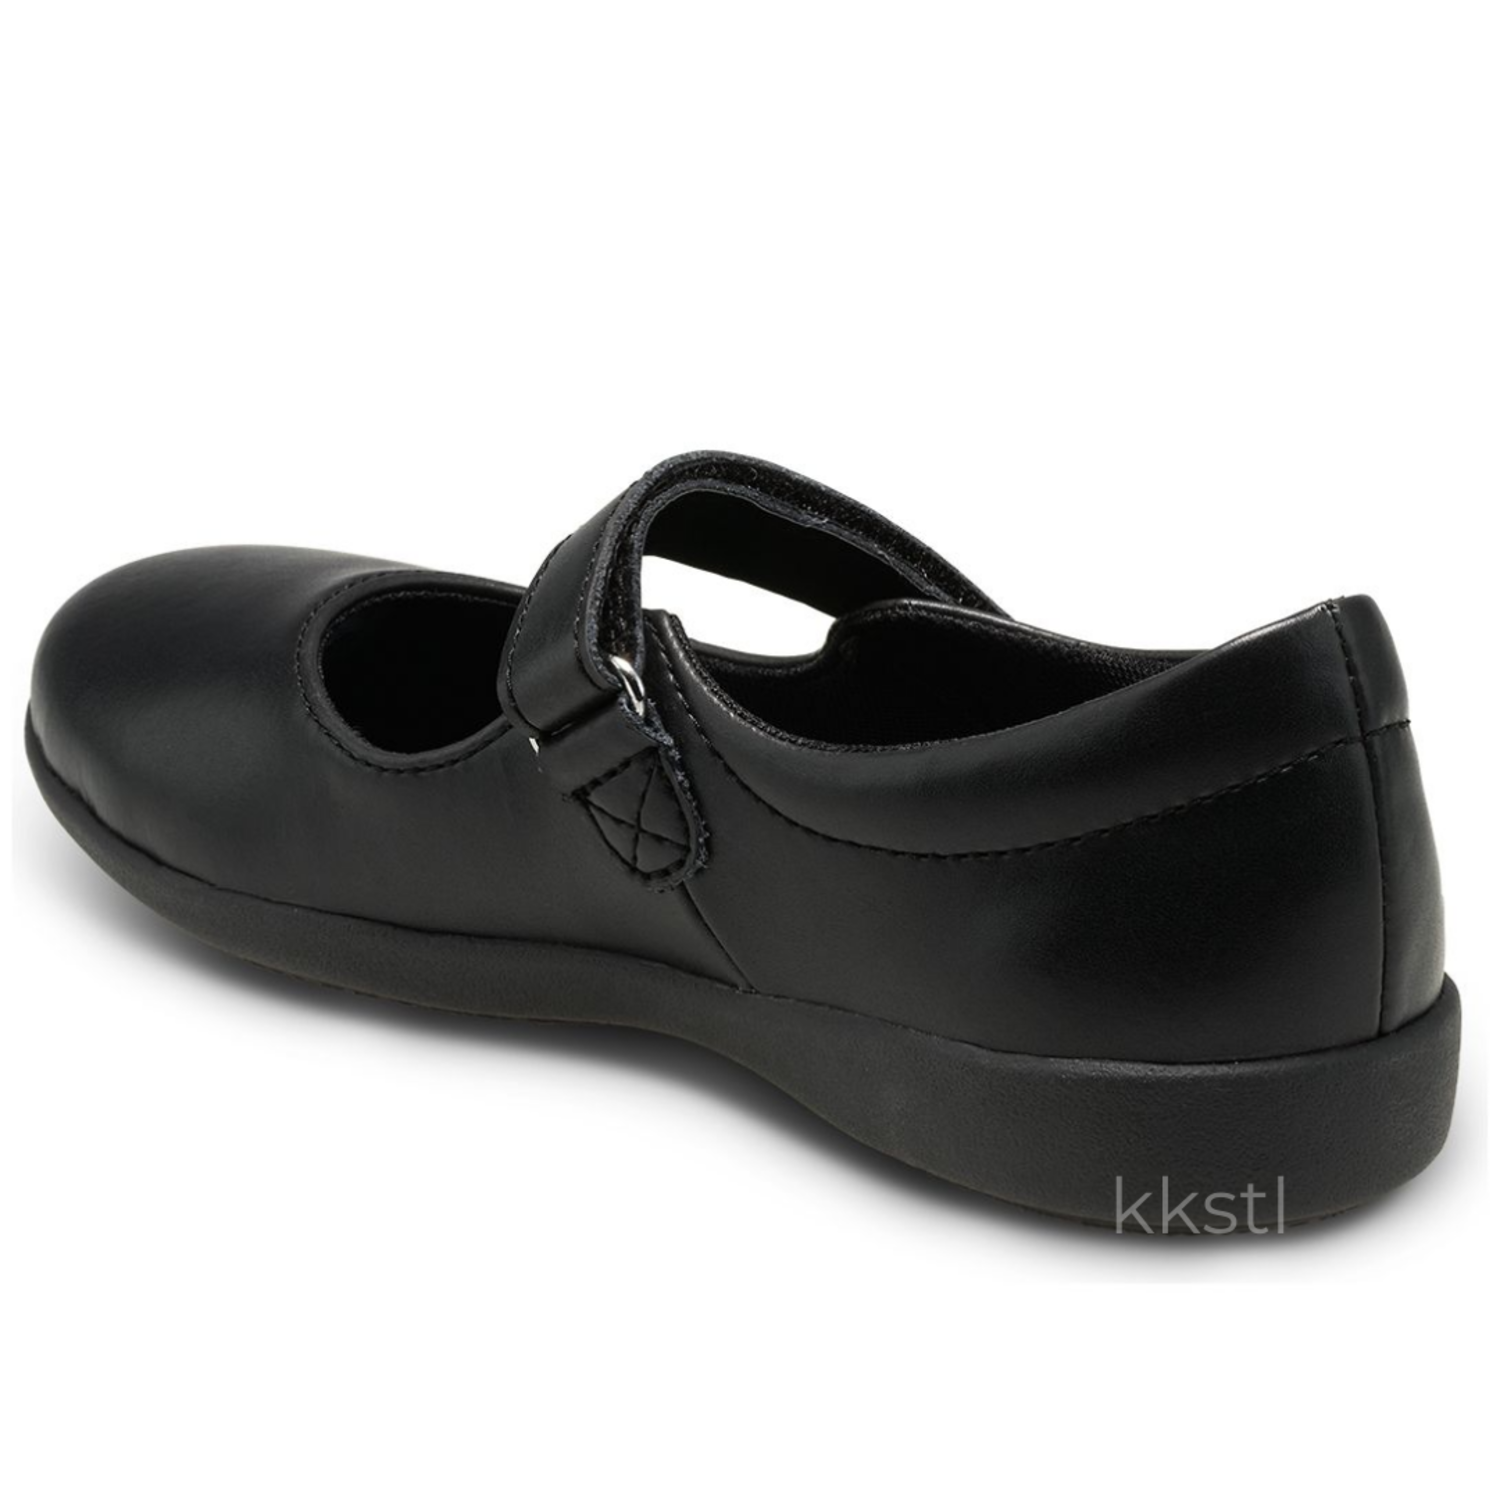 Hush Puppies Lexi Black - Kids Shoes in Canada - Kiddie Kobbler St